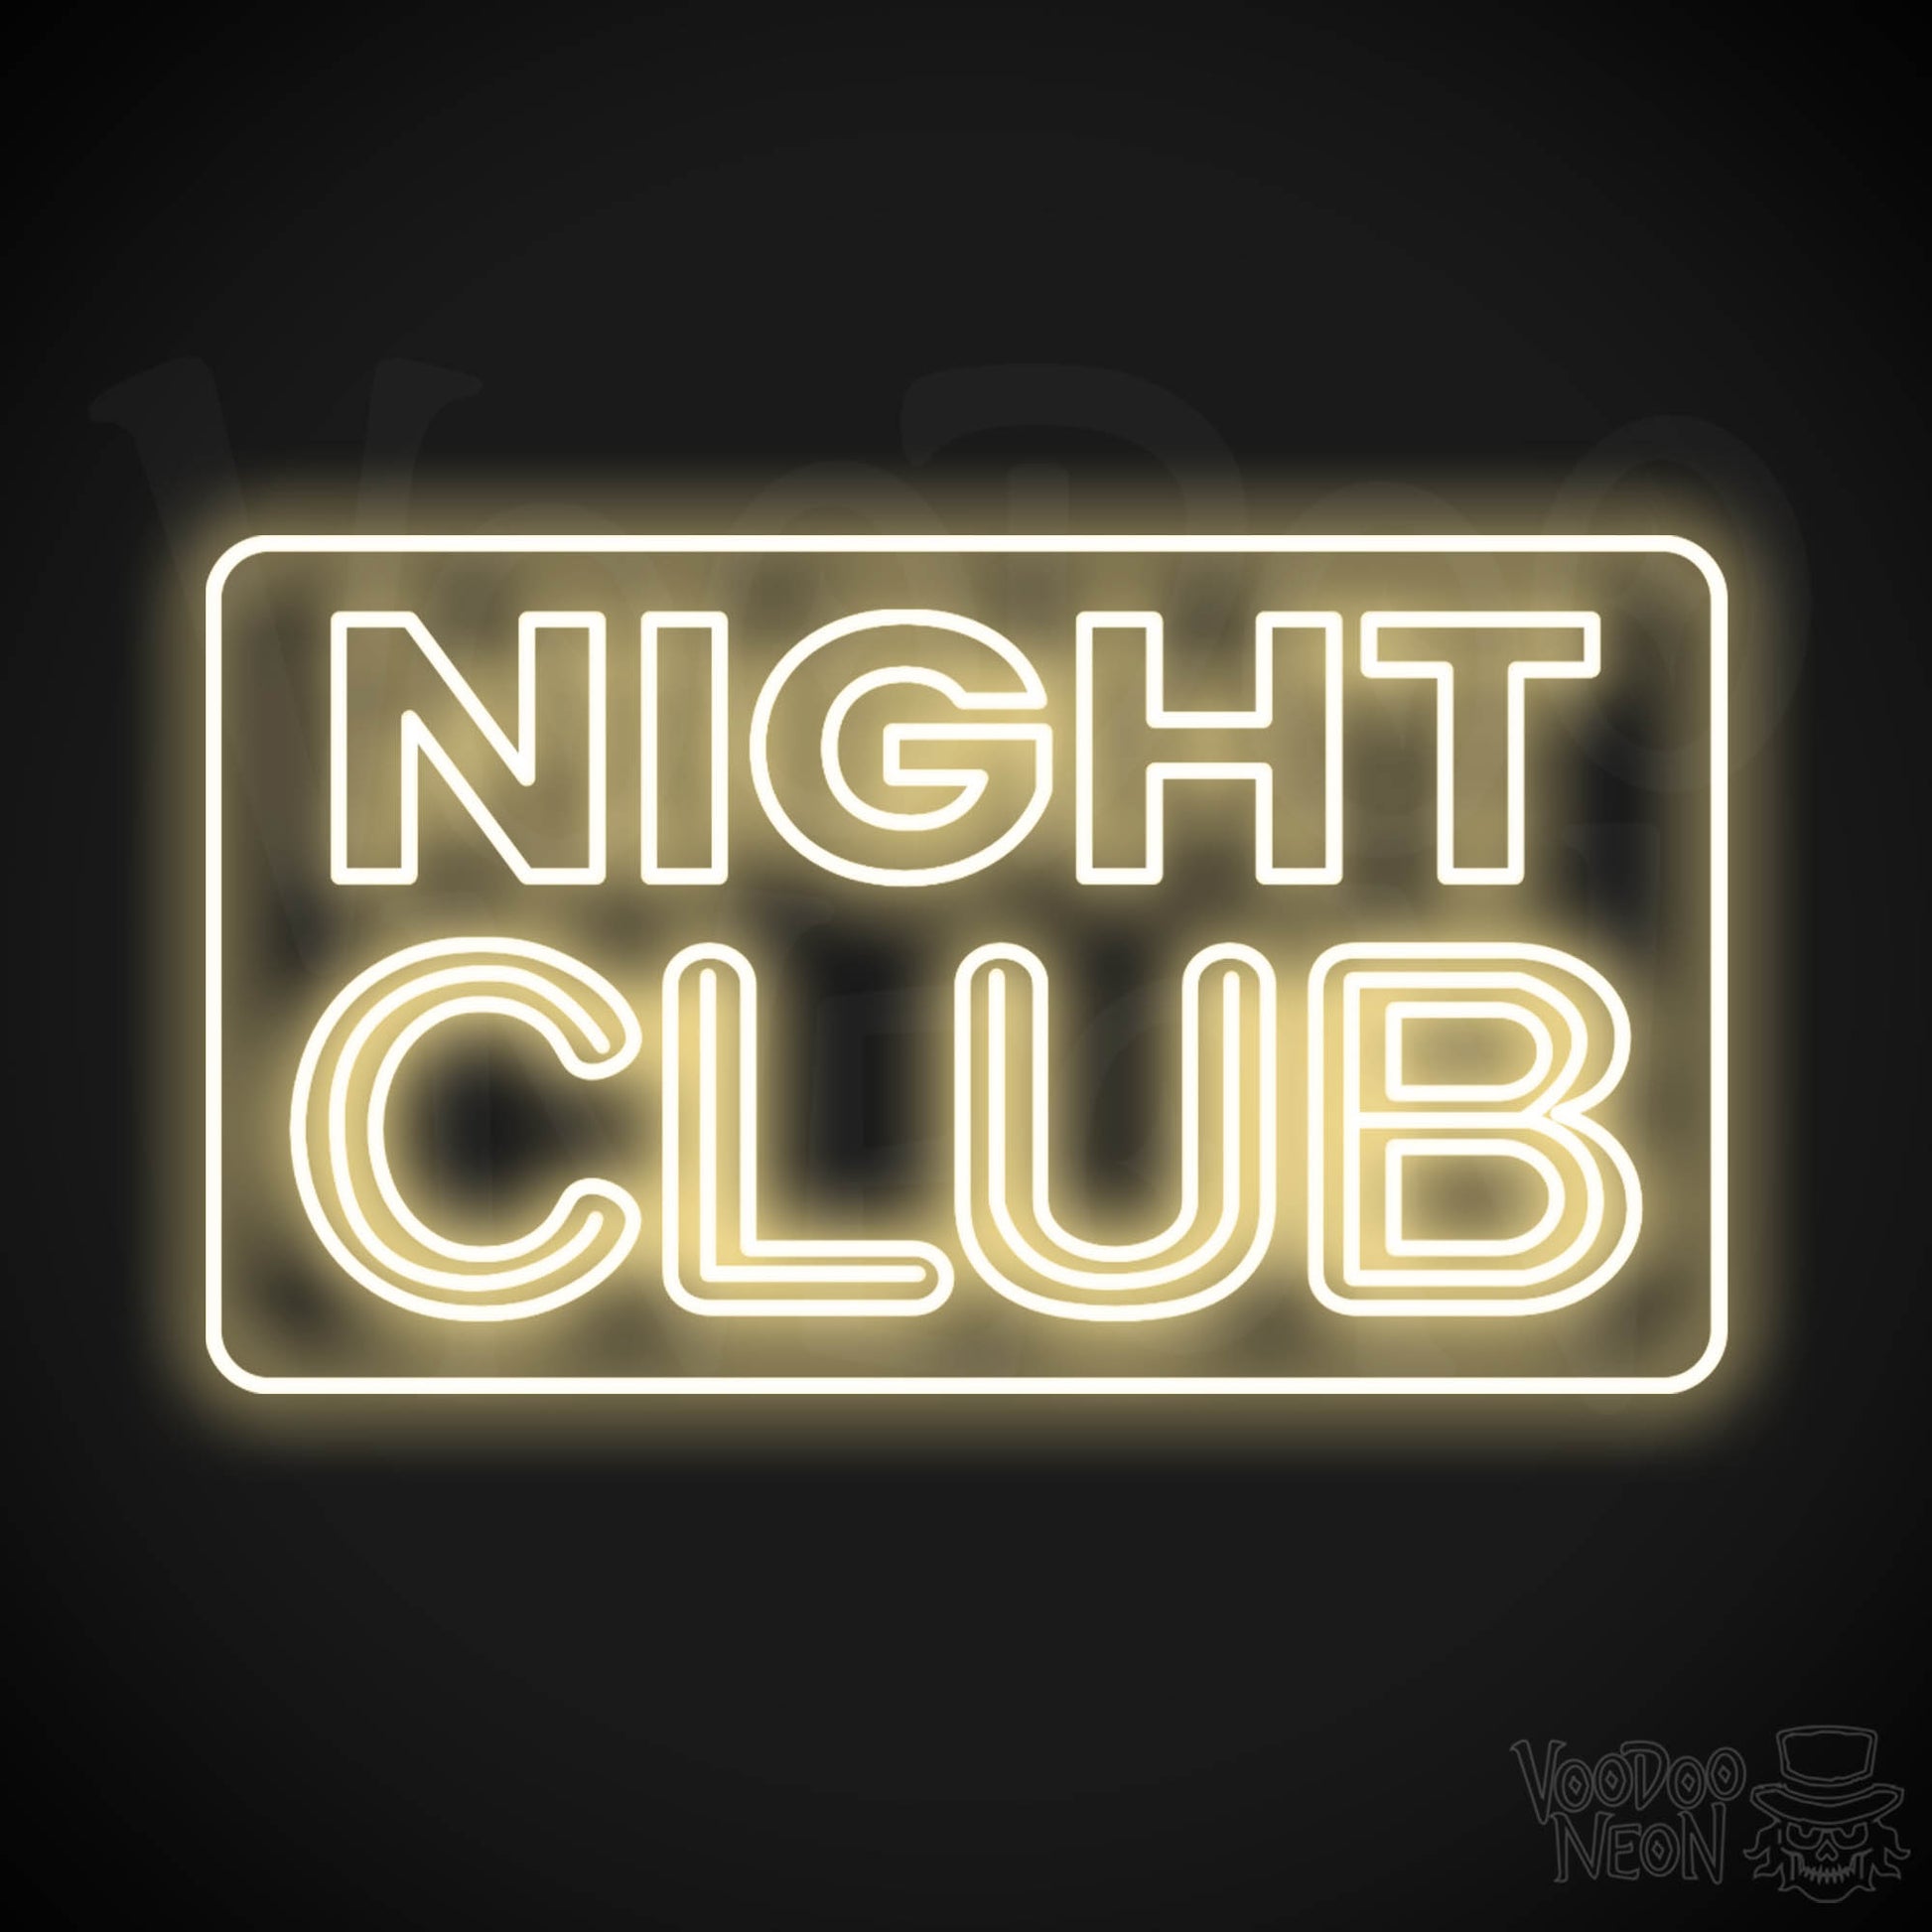 Night Club LED Neon - Warm White